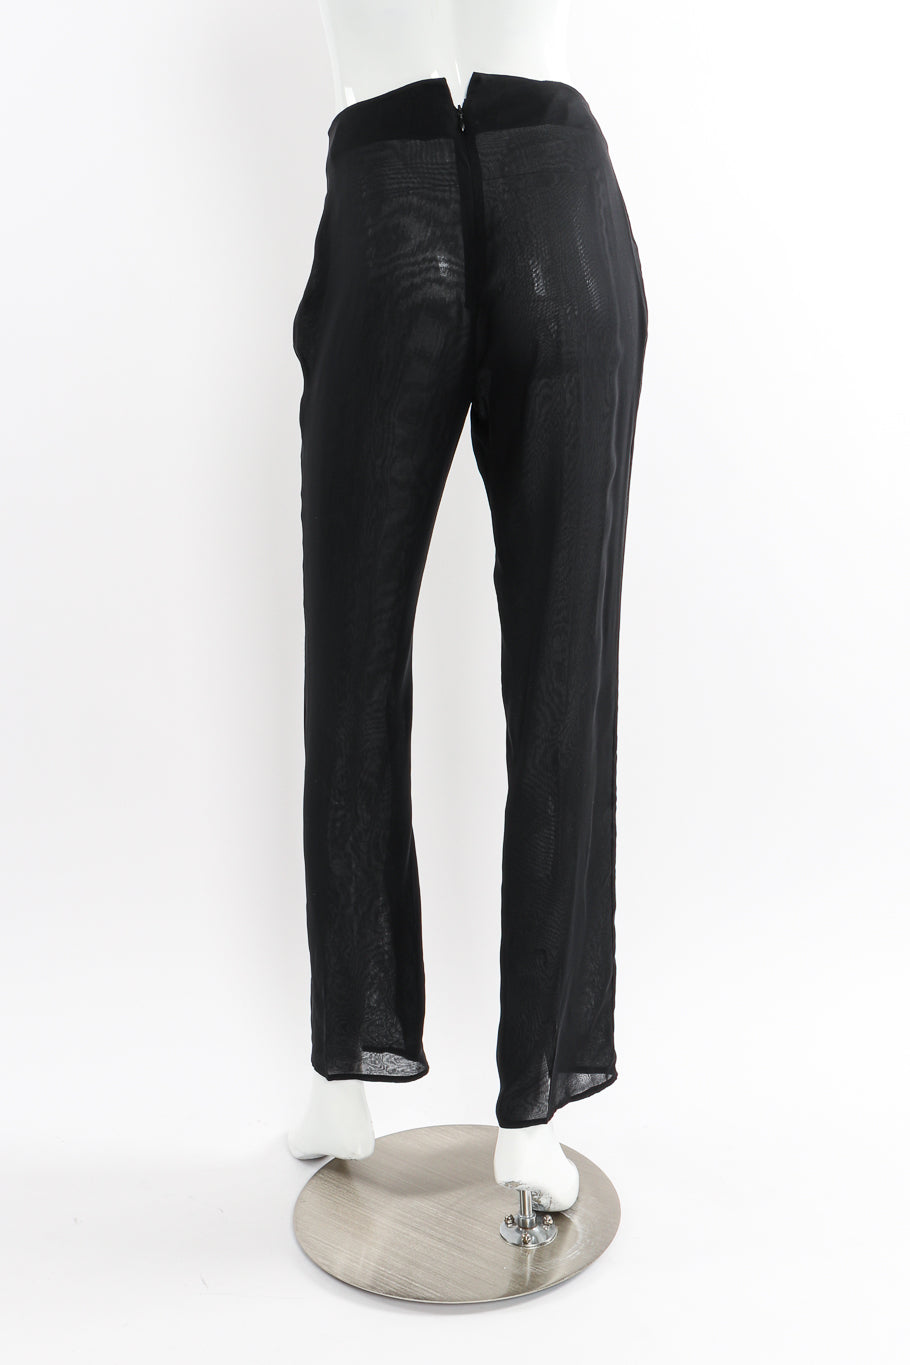 Vintage Richard Tyler Silk Bolero Top and Pants Set back view of pant on mannequin @Recessla